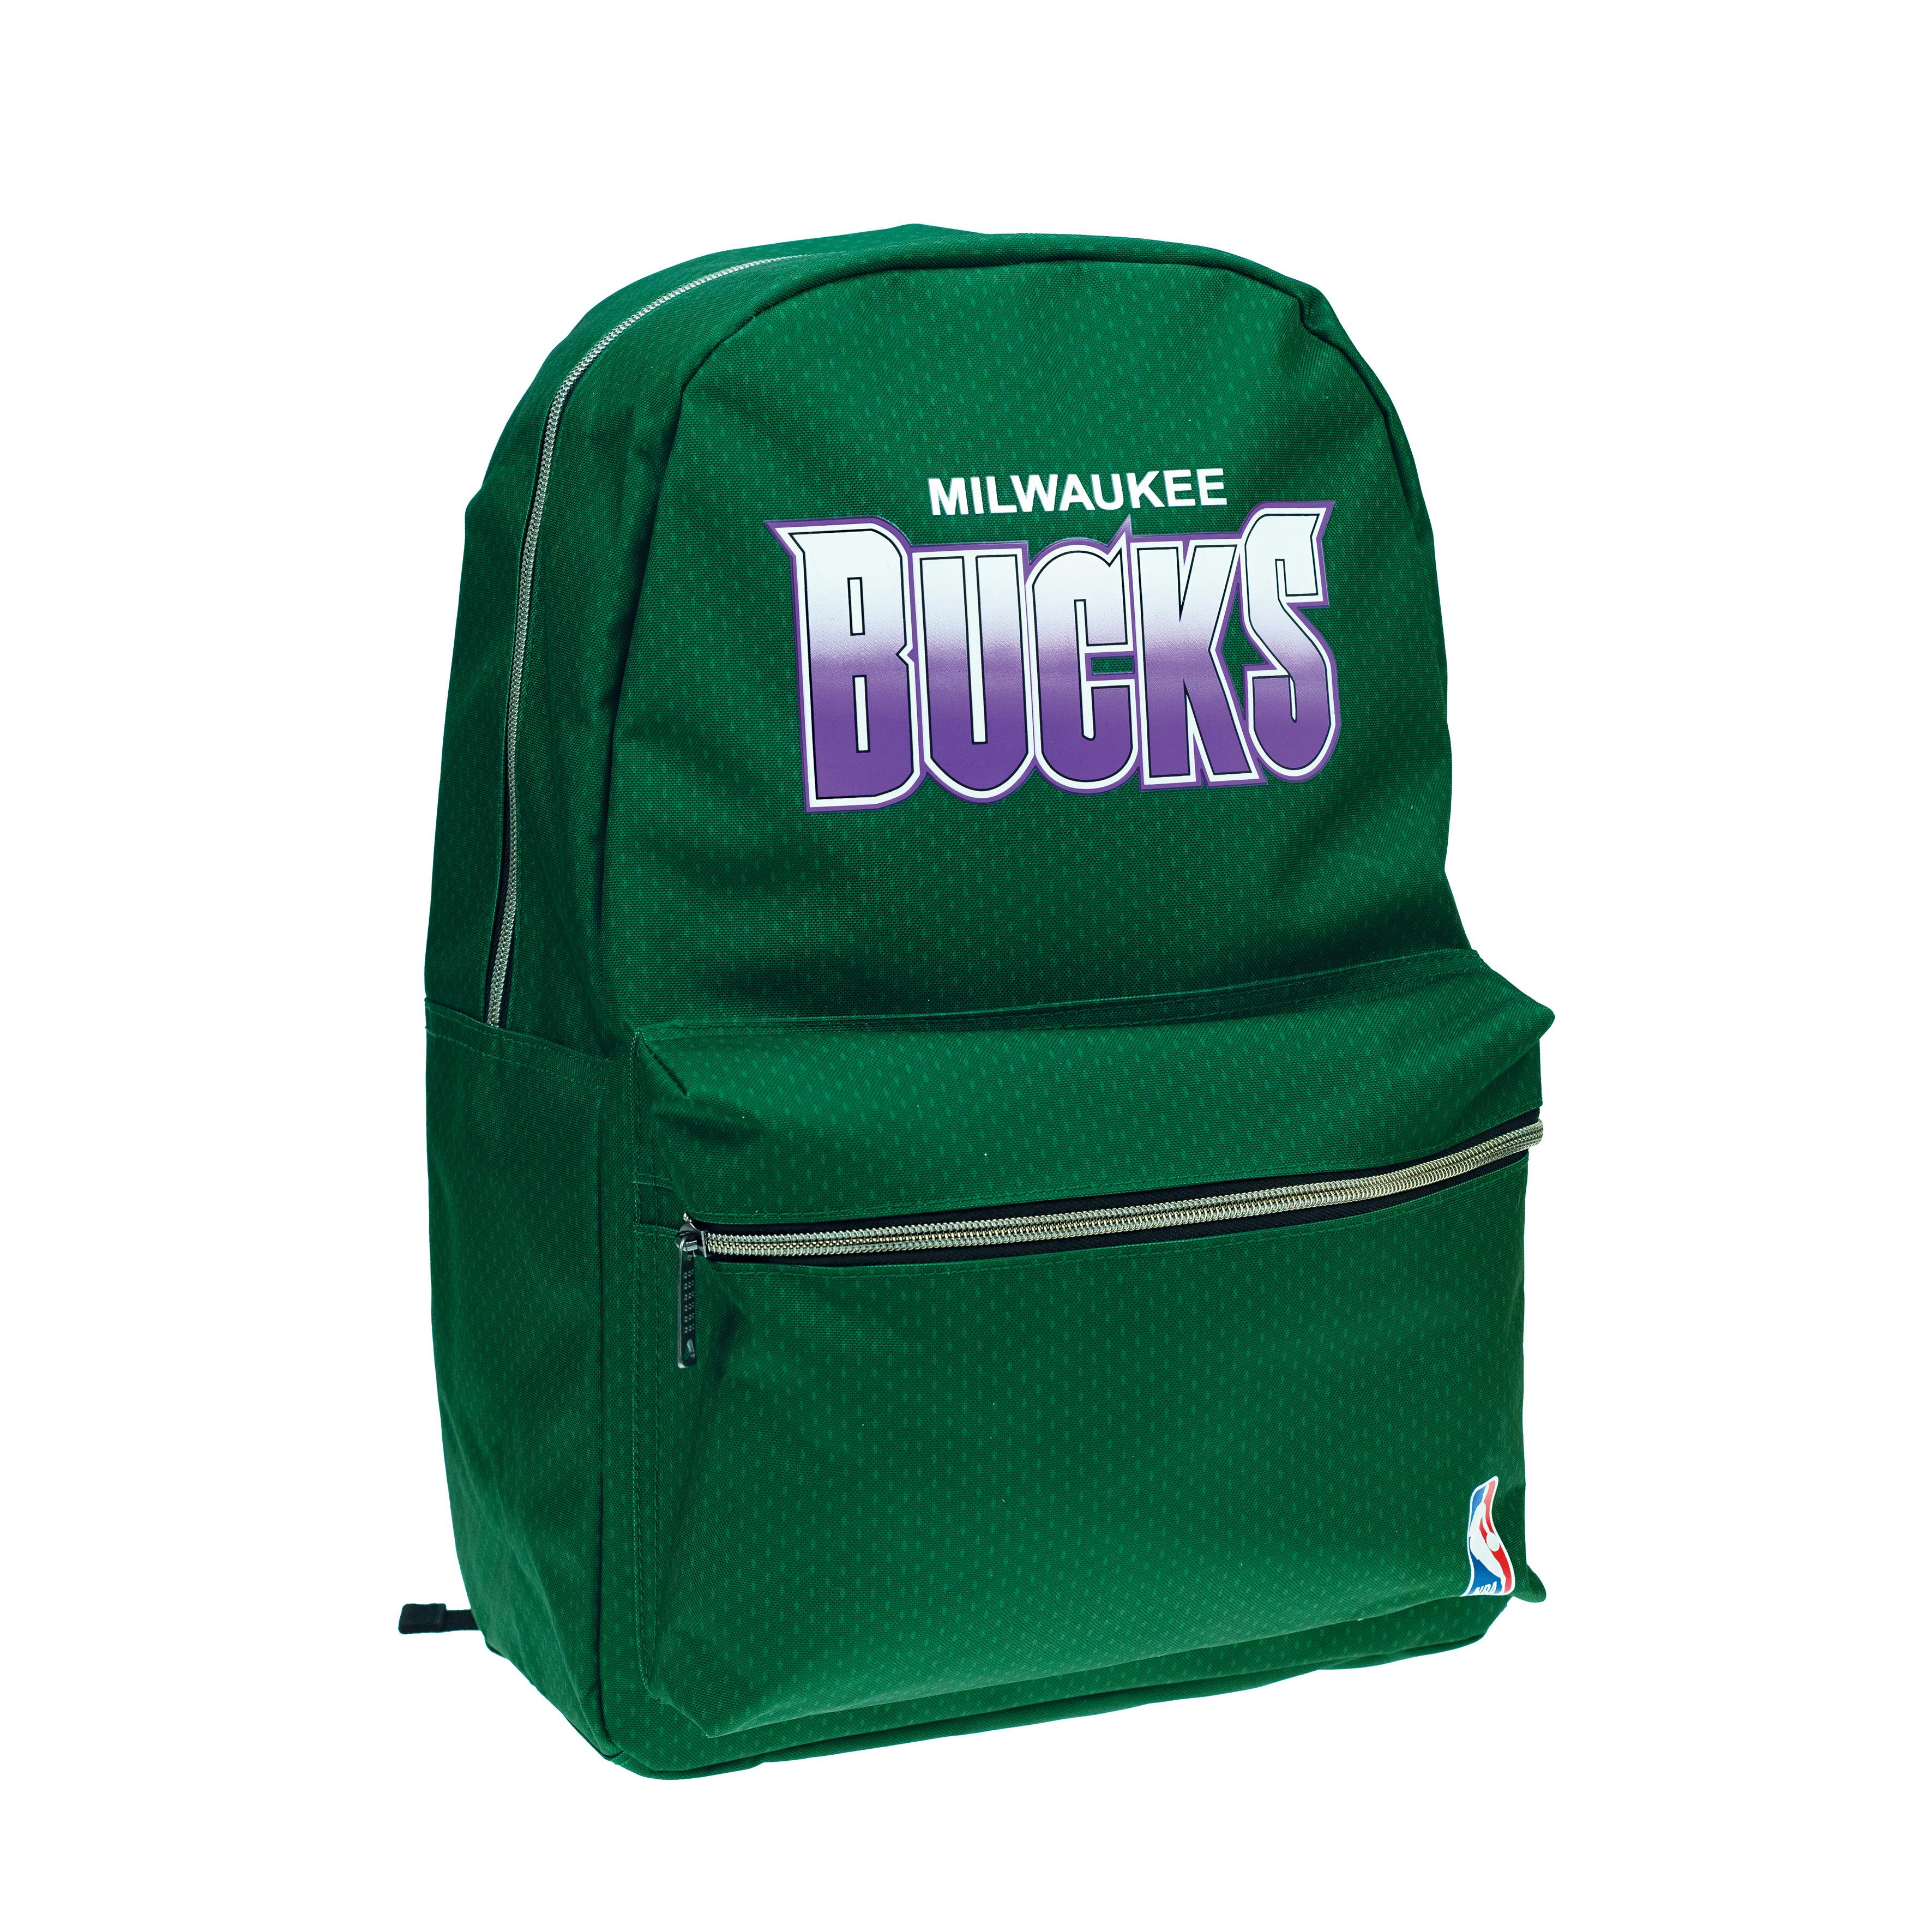 Back Me Up NBA MILWAUKEE BUCKS Σχολική Τσάντα Πλάτης Backpack Δημοτικού Πράσινη με 1 Κεντρική Θήκη  338-26033 